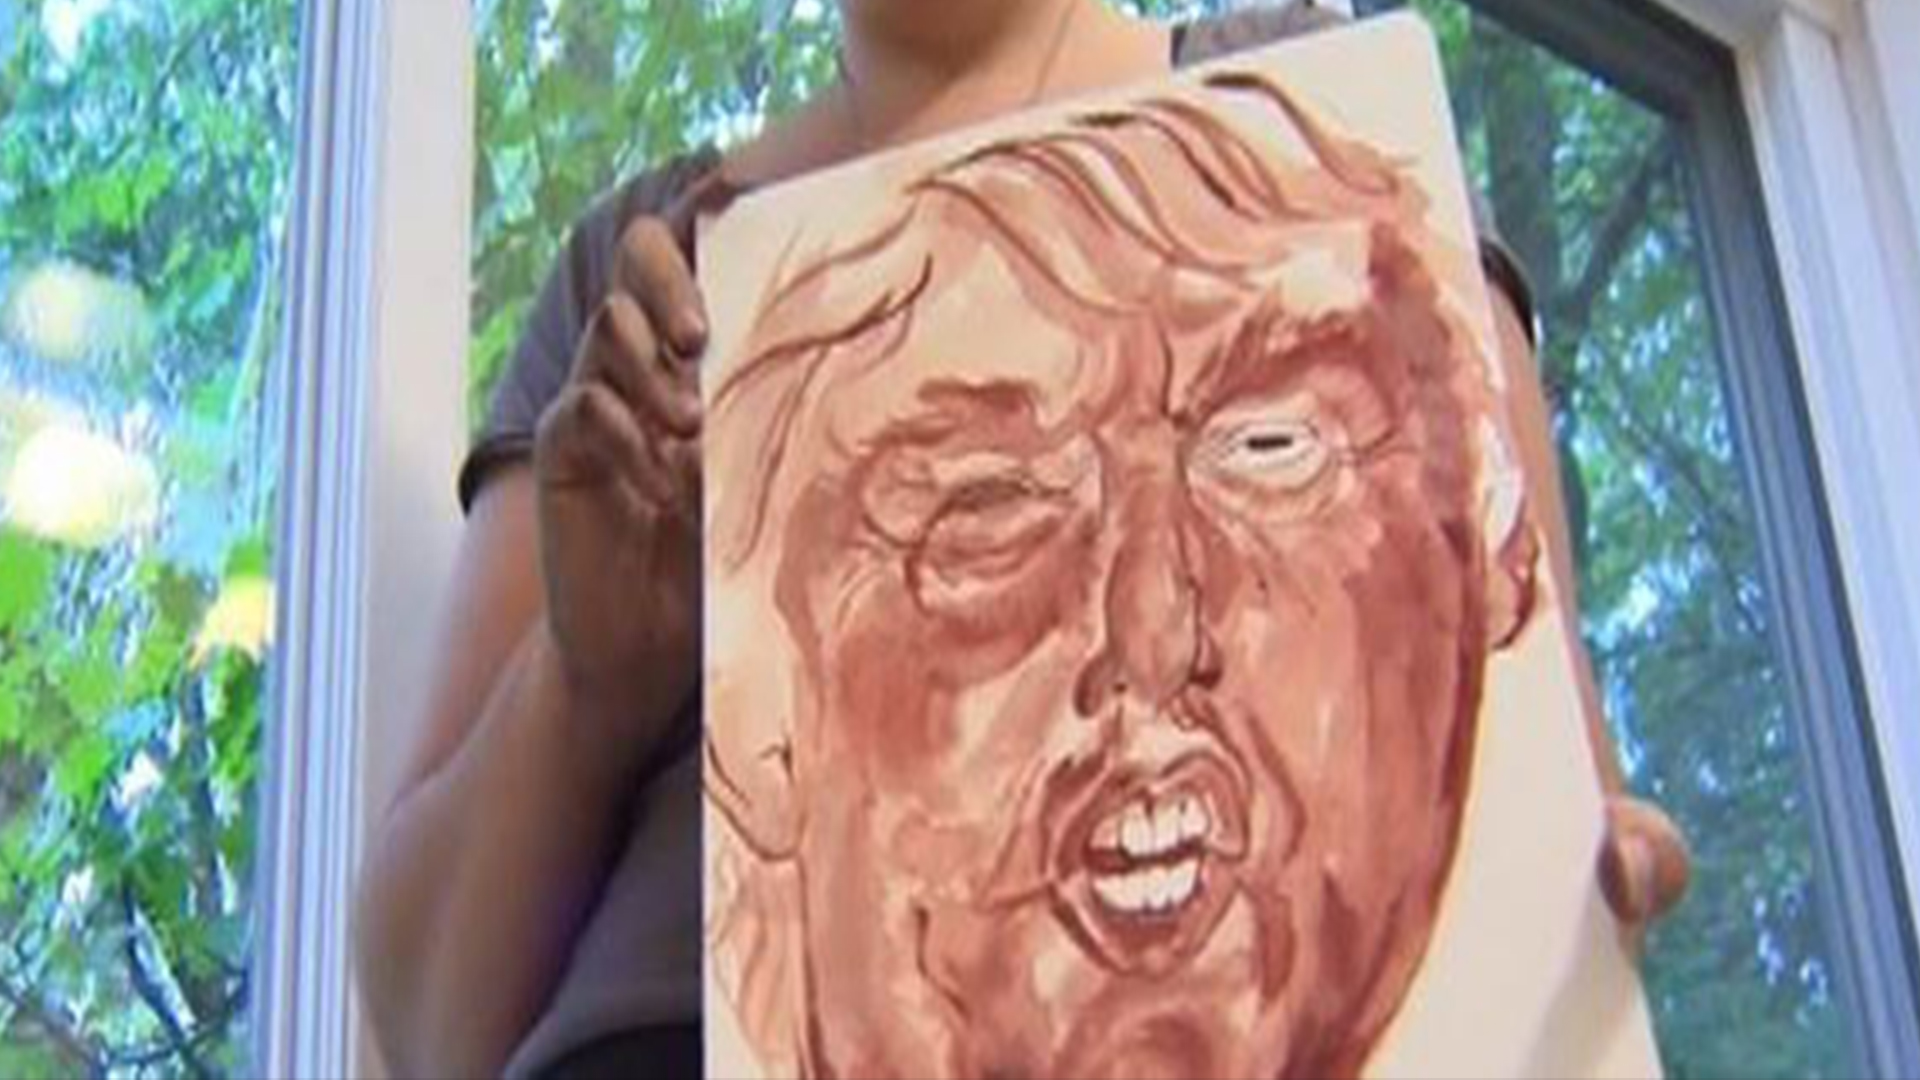 Artist Uses Her Menstrual Blood to Paint Donald Trump - NBC News1920 x 1080